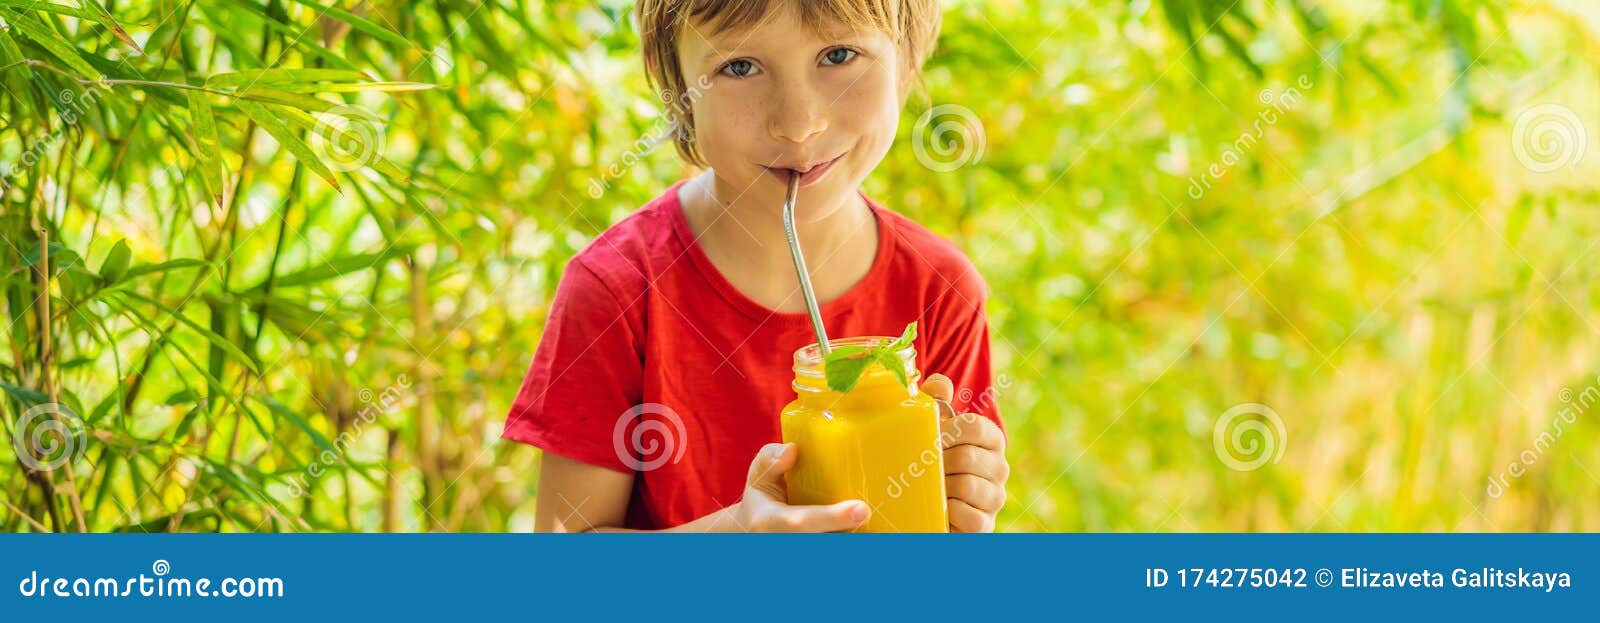 Boy Drinking Juicy Smoothie from Mango in Glass Mason Jar. Healthy Life ...